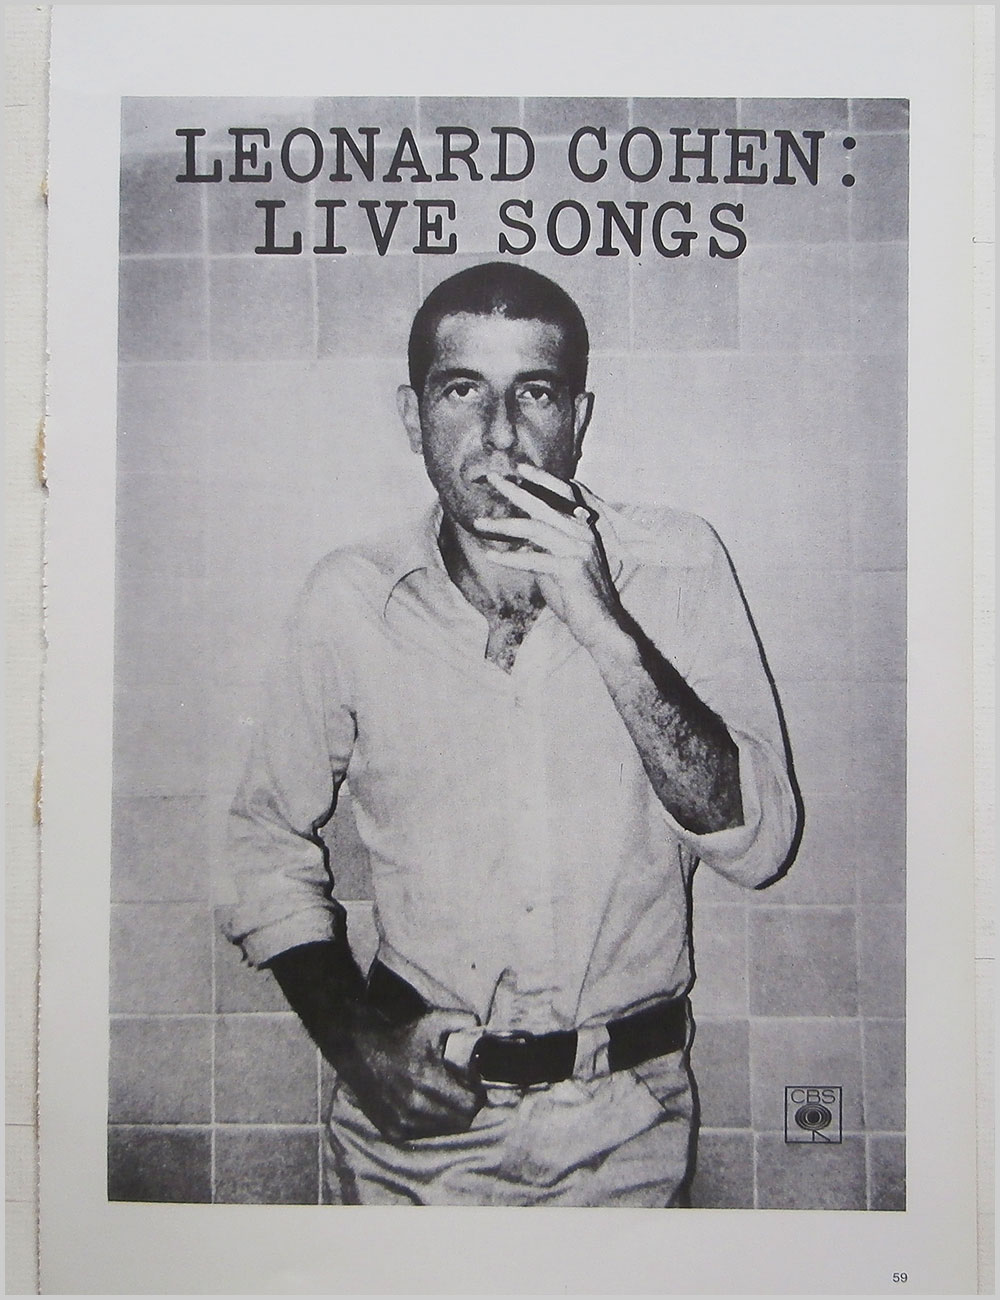 Leonard Cohen and MC5, Chuck Berry, Sun Ra - Rock Poster: Leonard Cohen: Live Songs b/w MC5, Chuck Berry, Sun Ra: Detroit Rock and Roll Revival  (PB100292) 